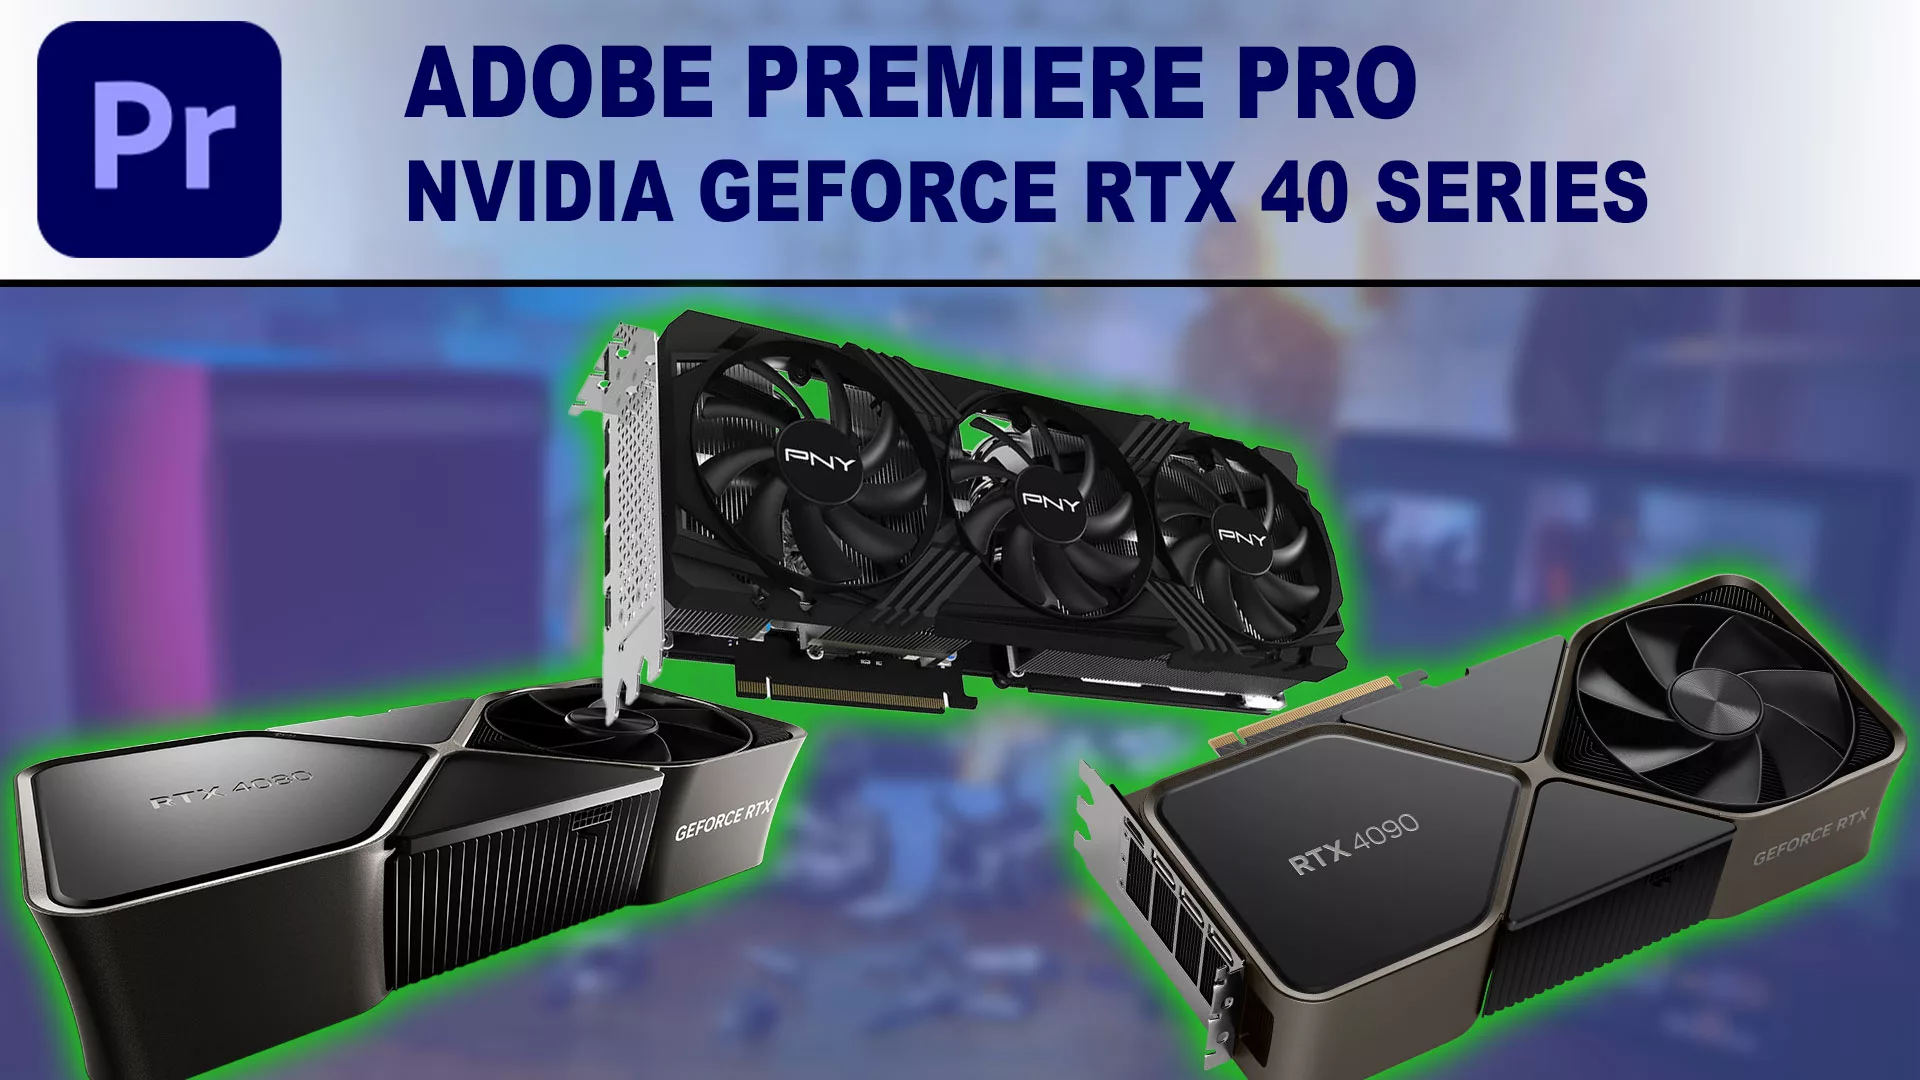 NVIDIA GeForce RTX 40 Series Premiere Pro Performance